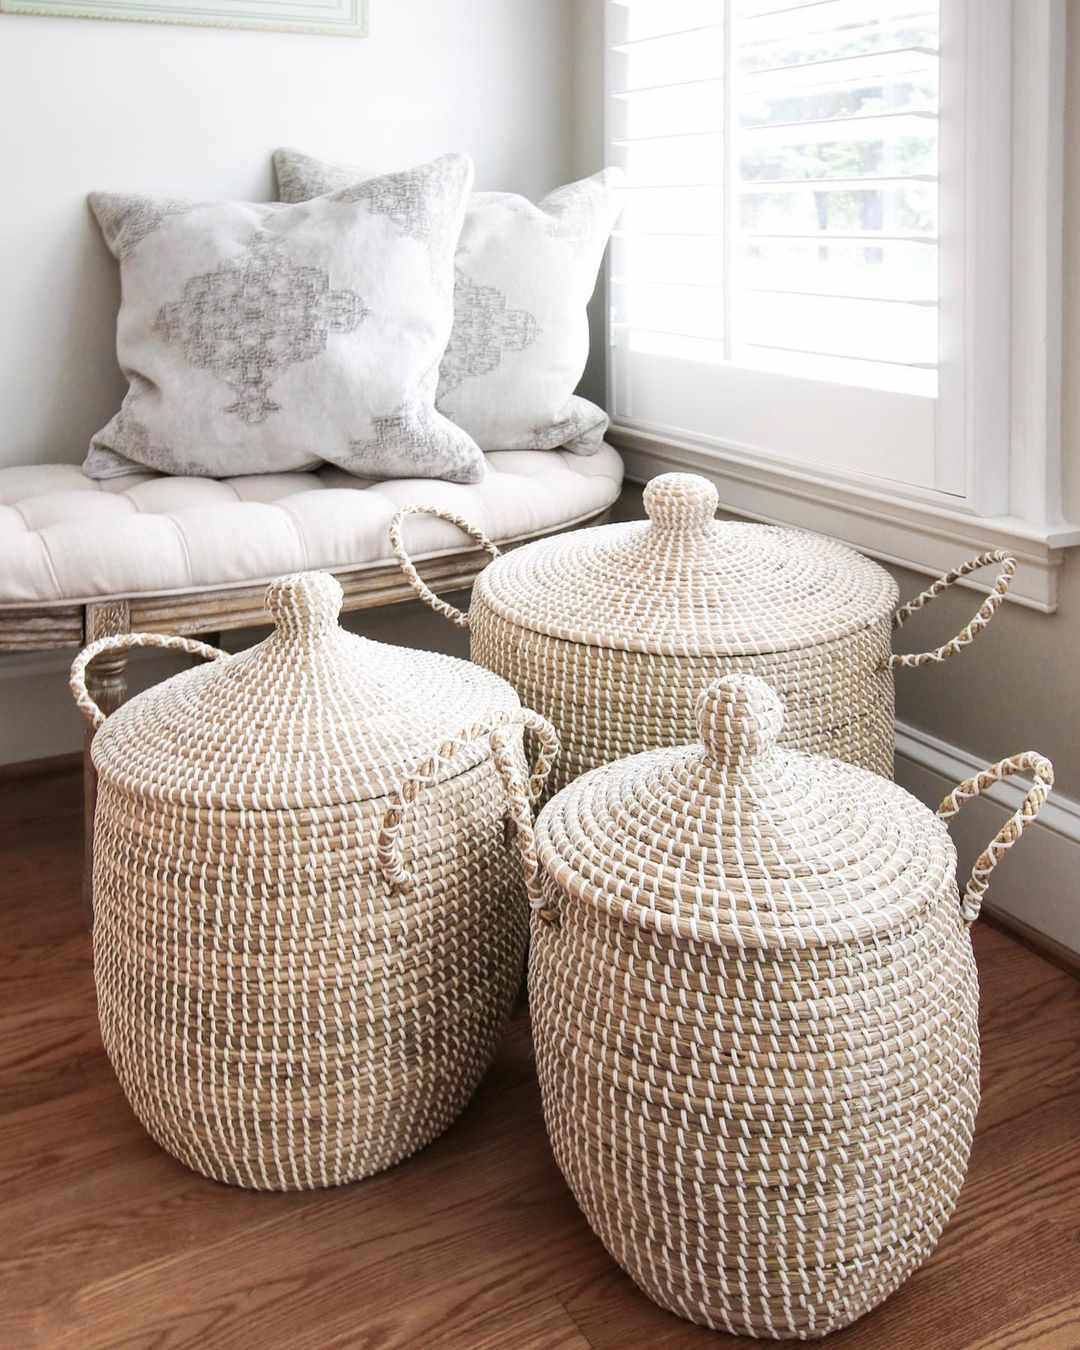 Three woven lidded baskets.